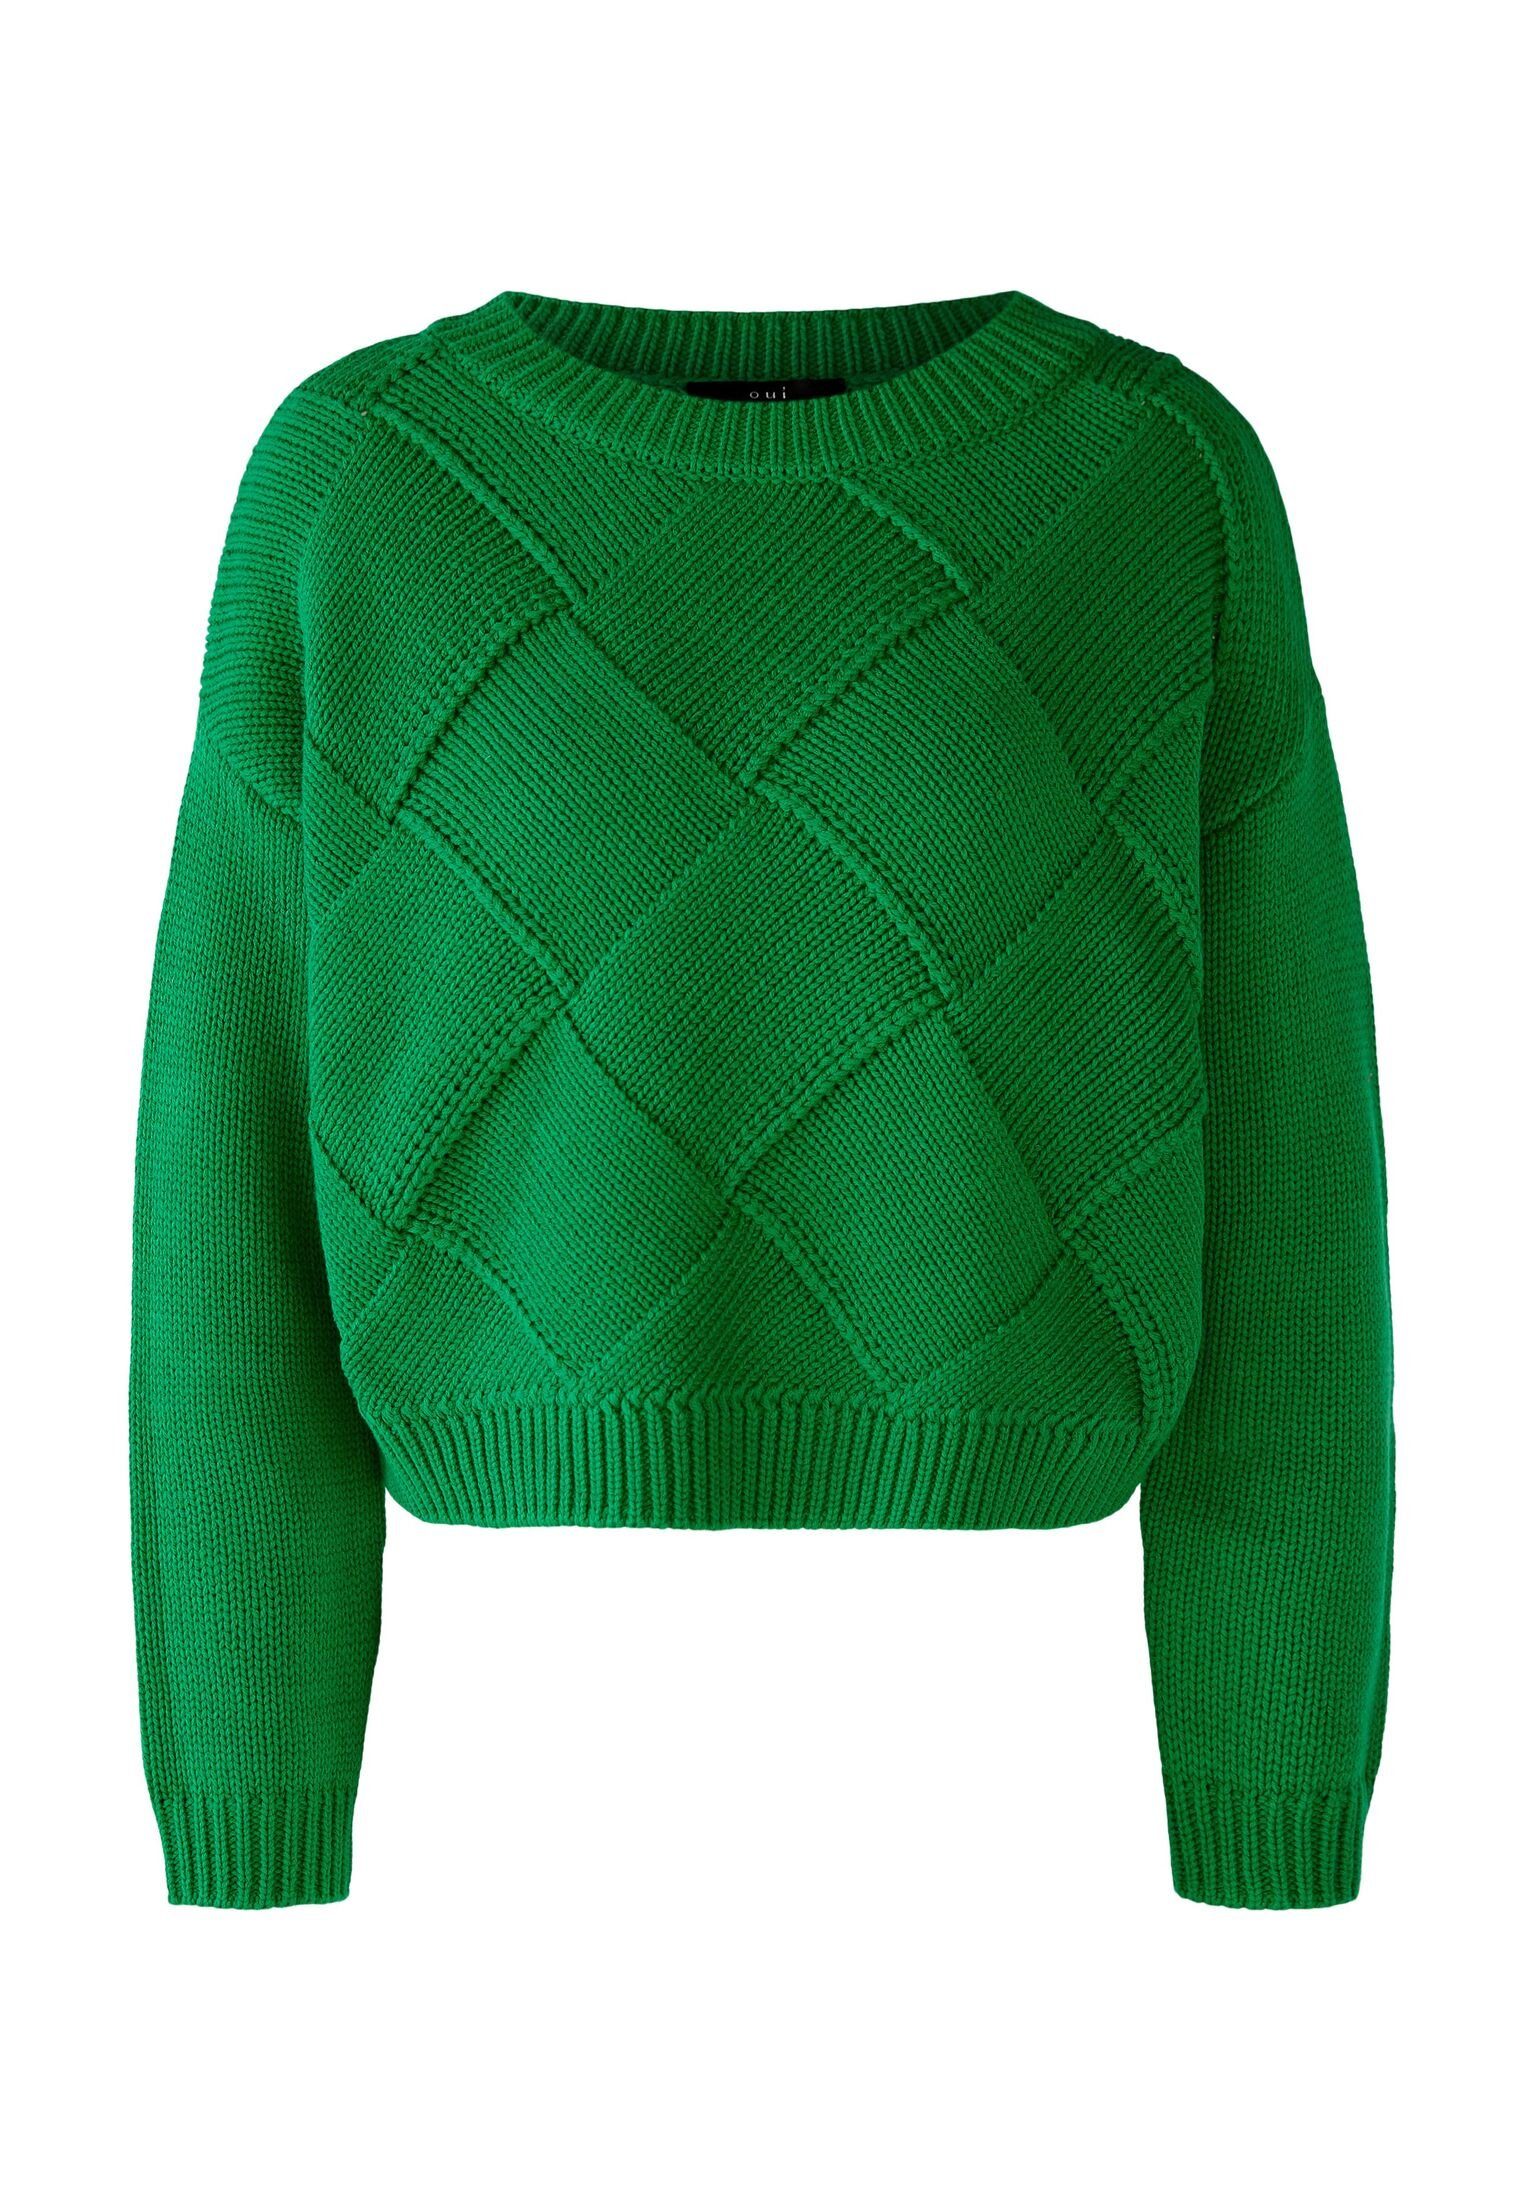 Oui Baumwollmischung Strickpullover green Pullover